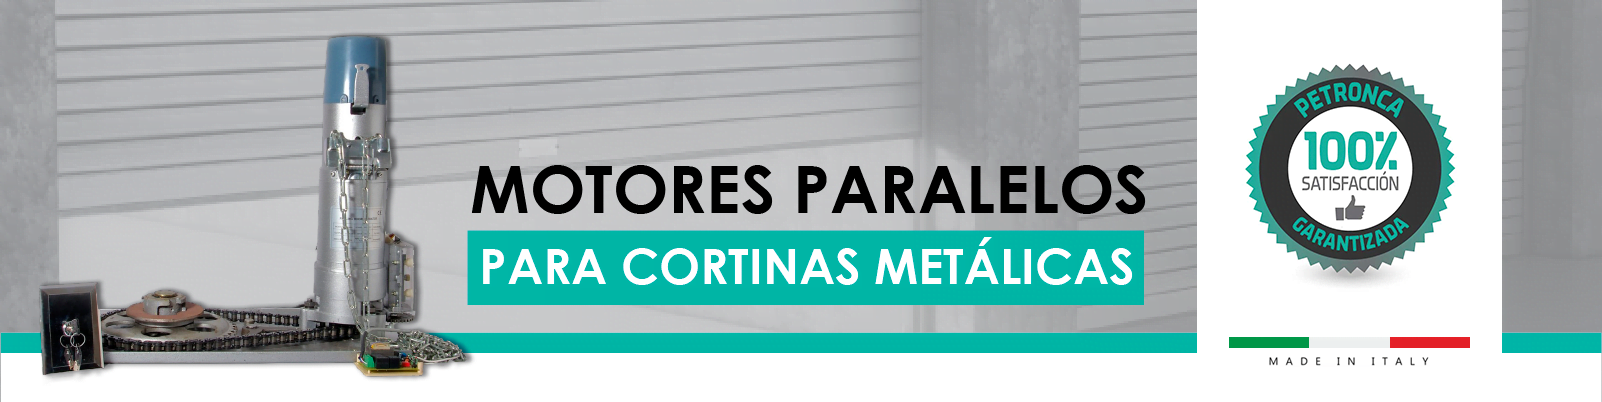 Motores paralelos para cortinas metálicas